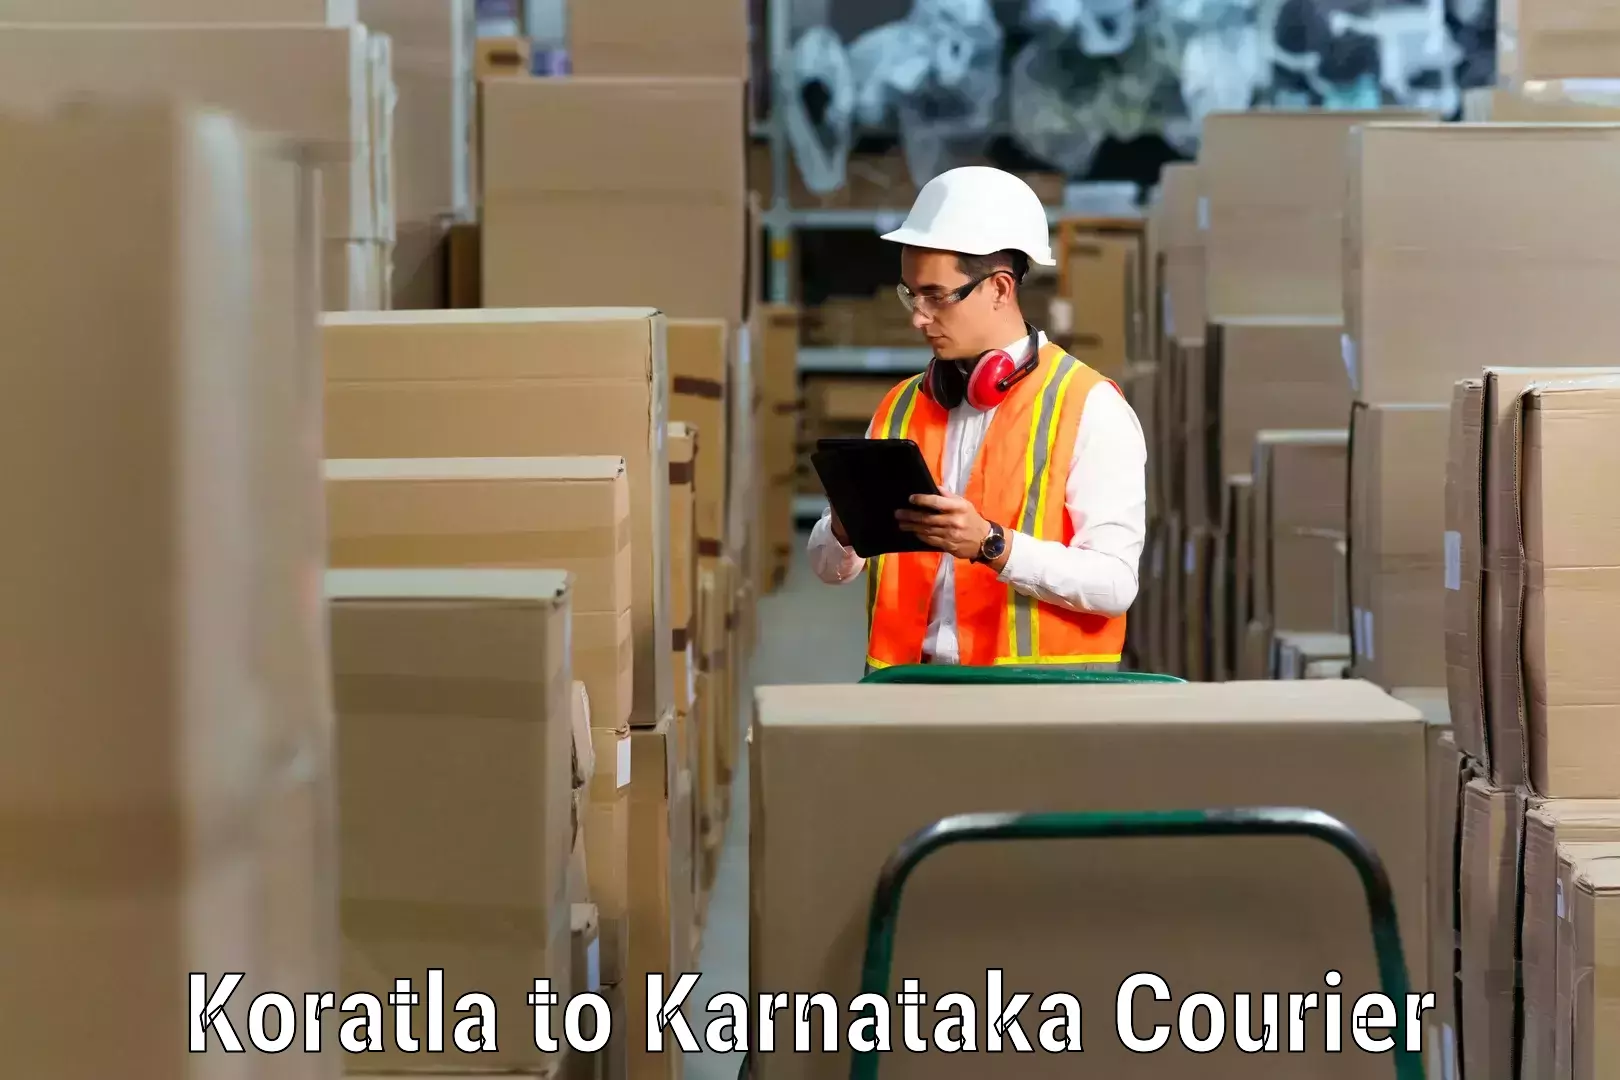 Professional moving company Koratla to Karnataka